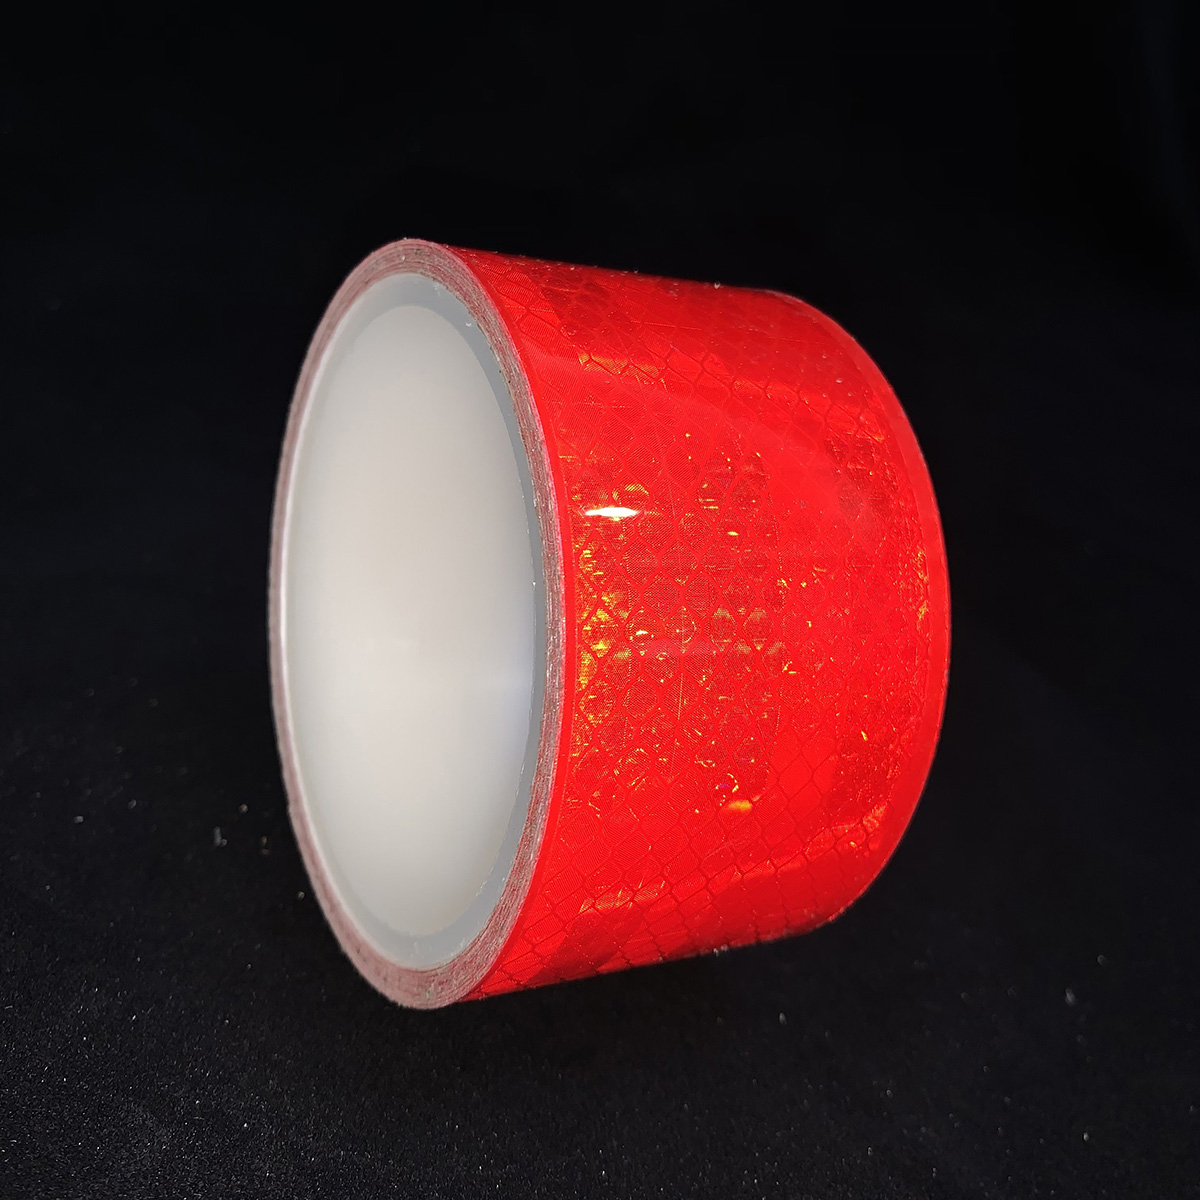 Cinta reflectante microprismática de alta visibilidad roja de 5 cm * 5 m